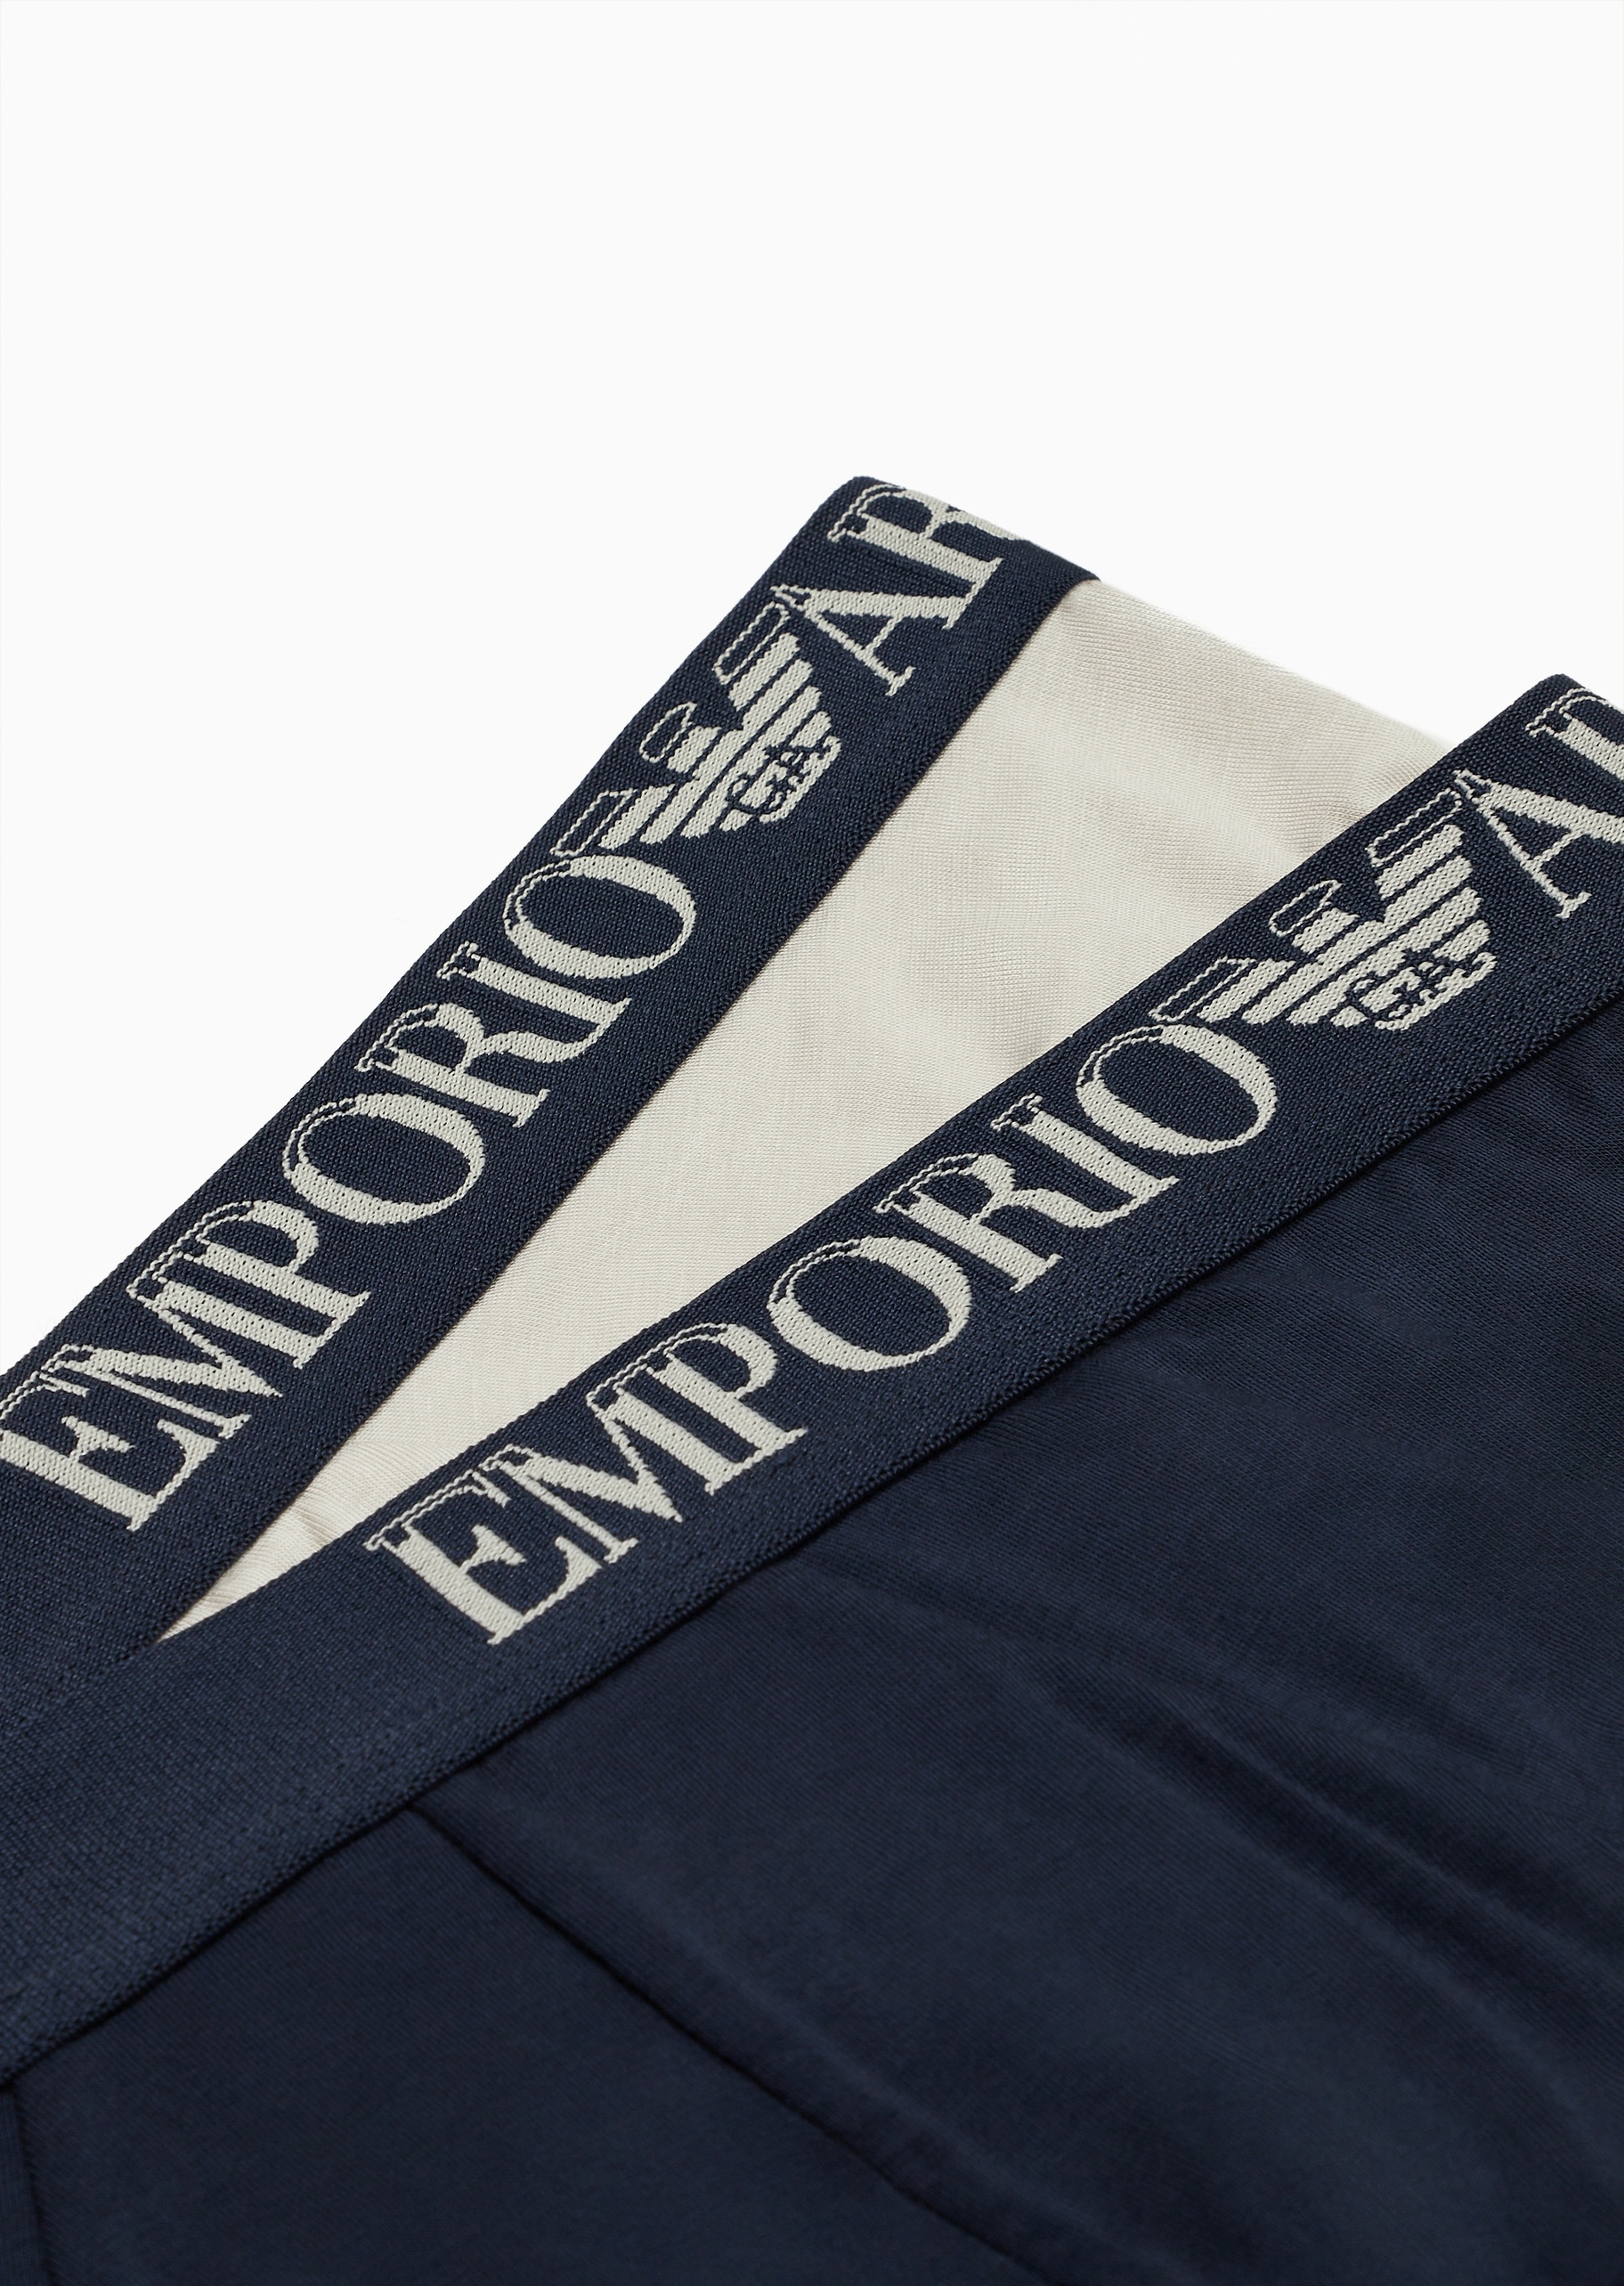 Emporio Armani 男士弹力合身三角两条装内裤套装